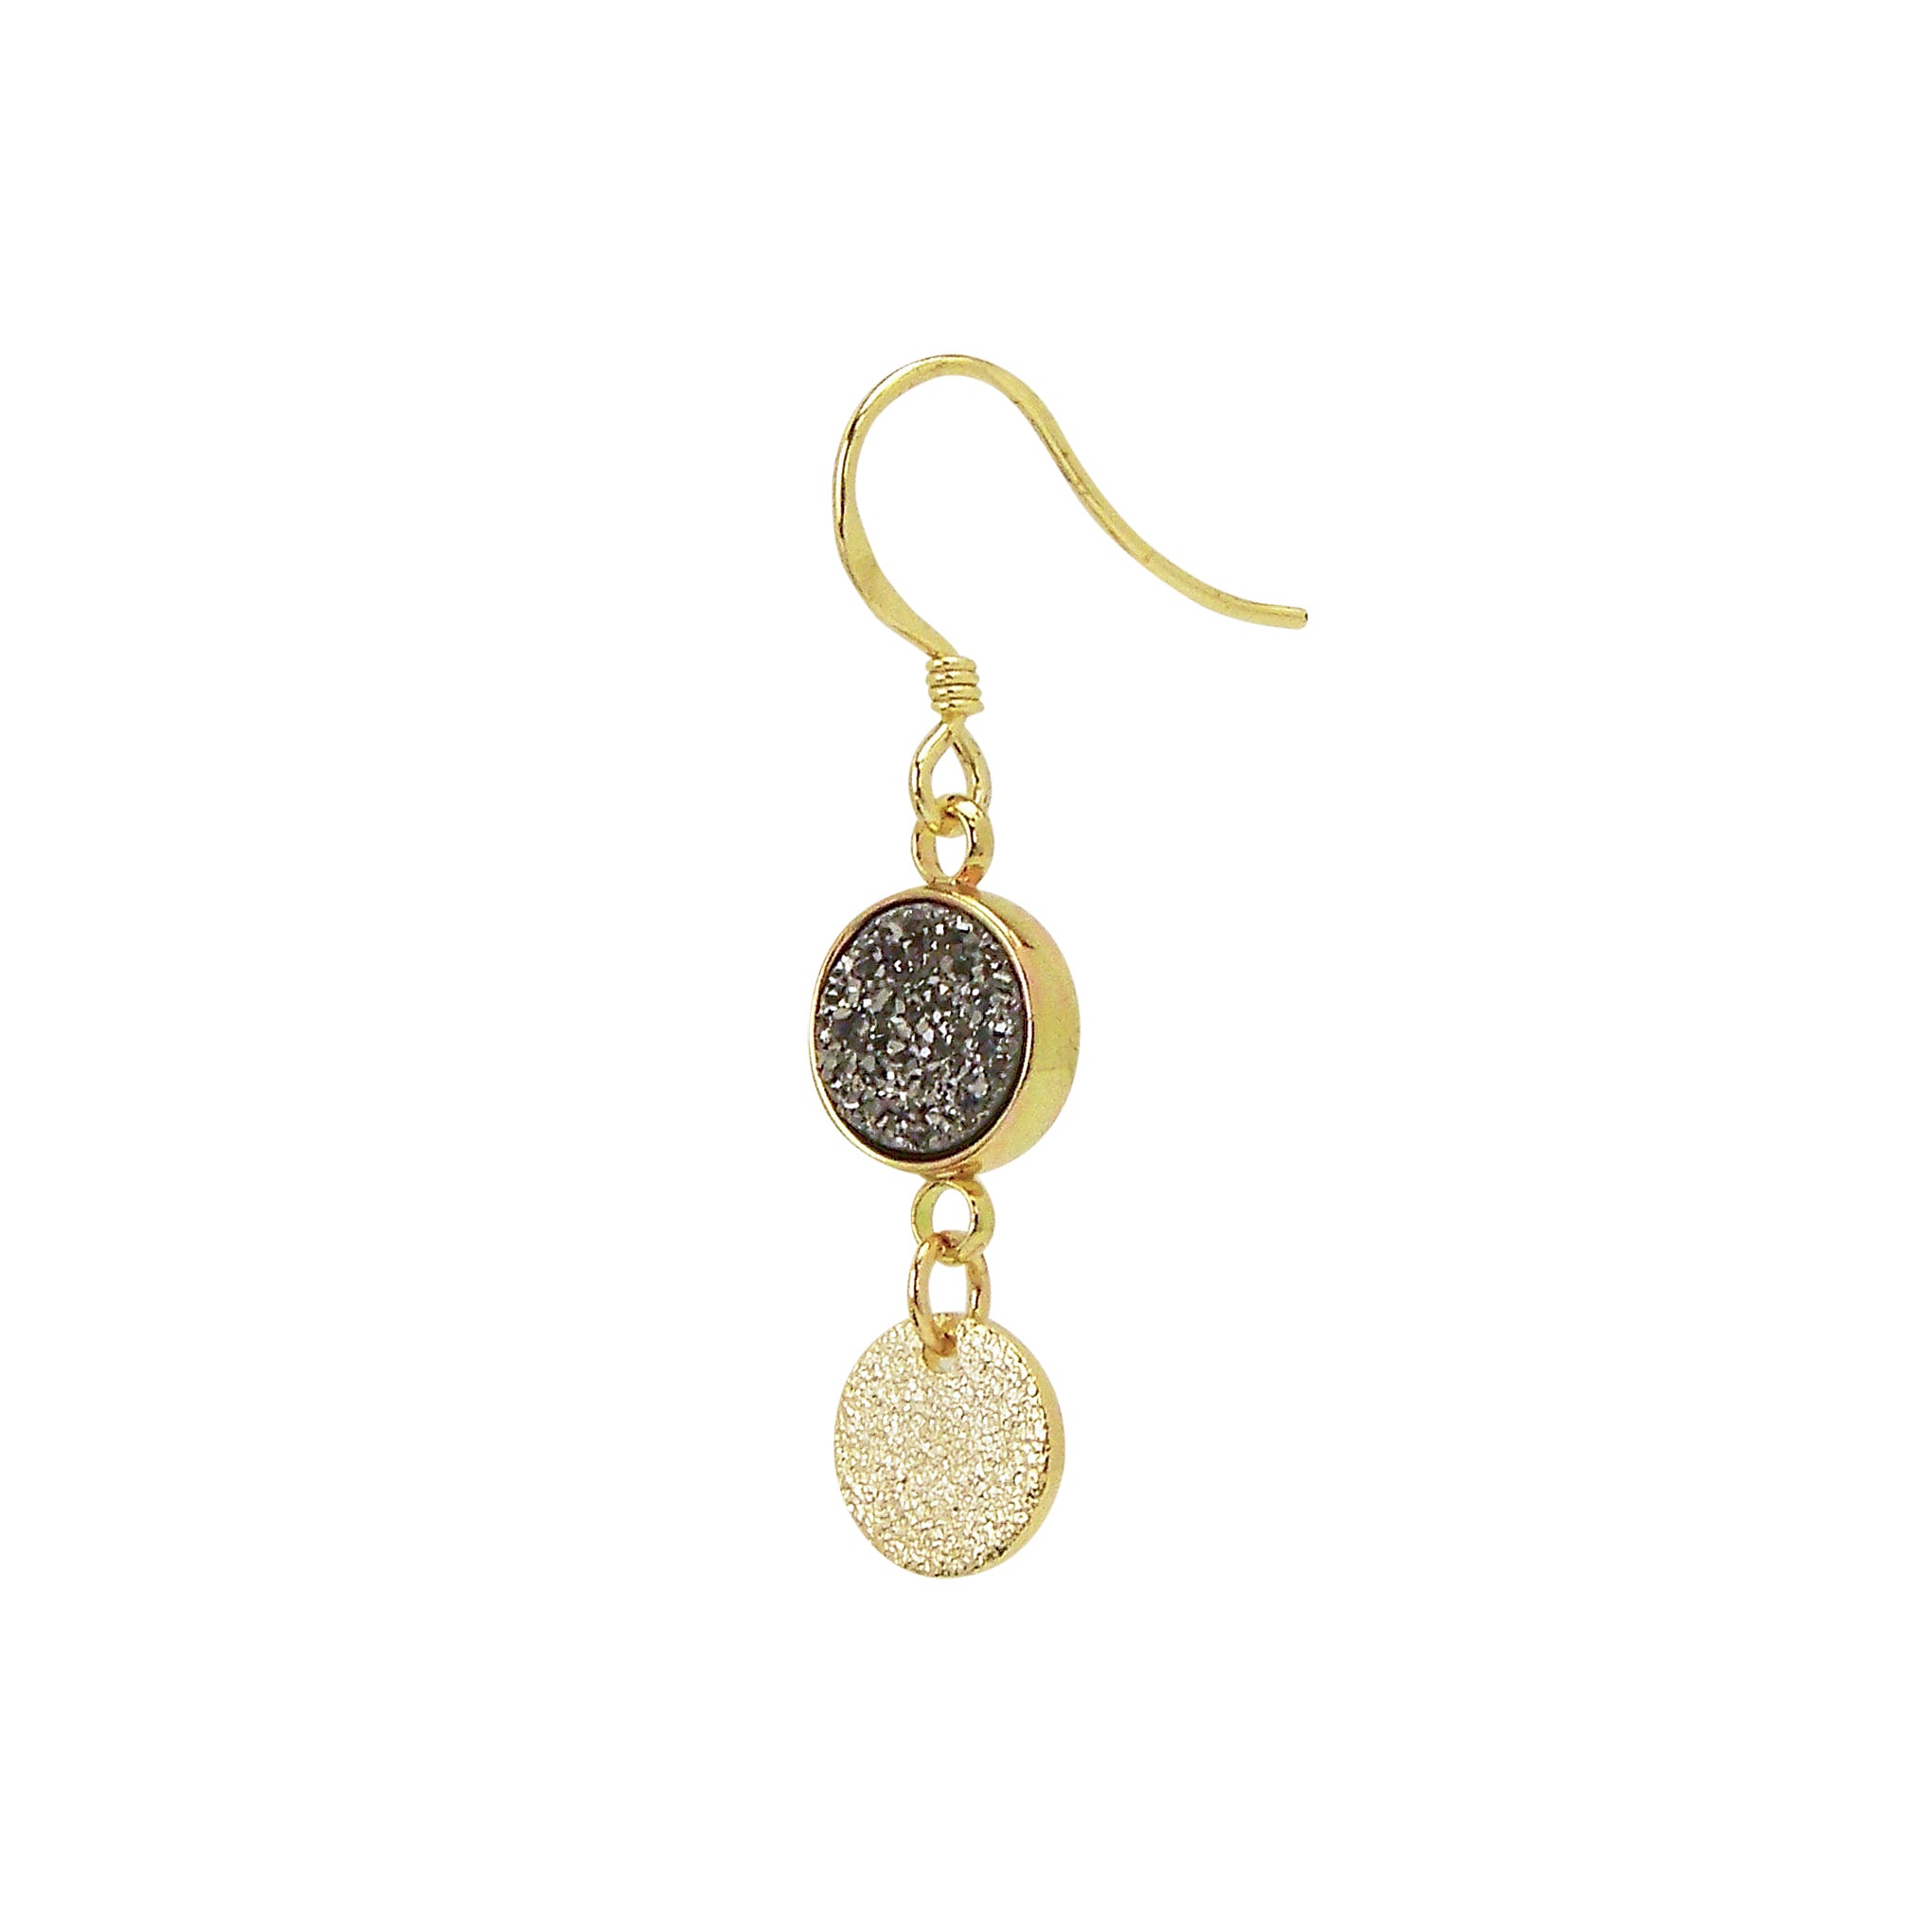 Charlene K Gray Druzy Dangle Earrings with Gold Vermeil Disc